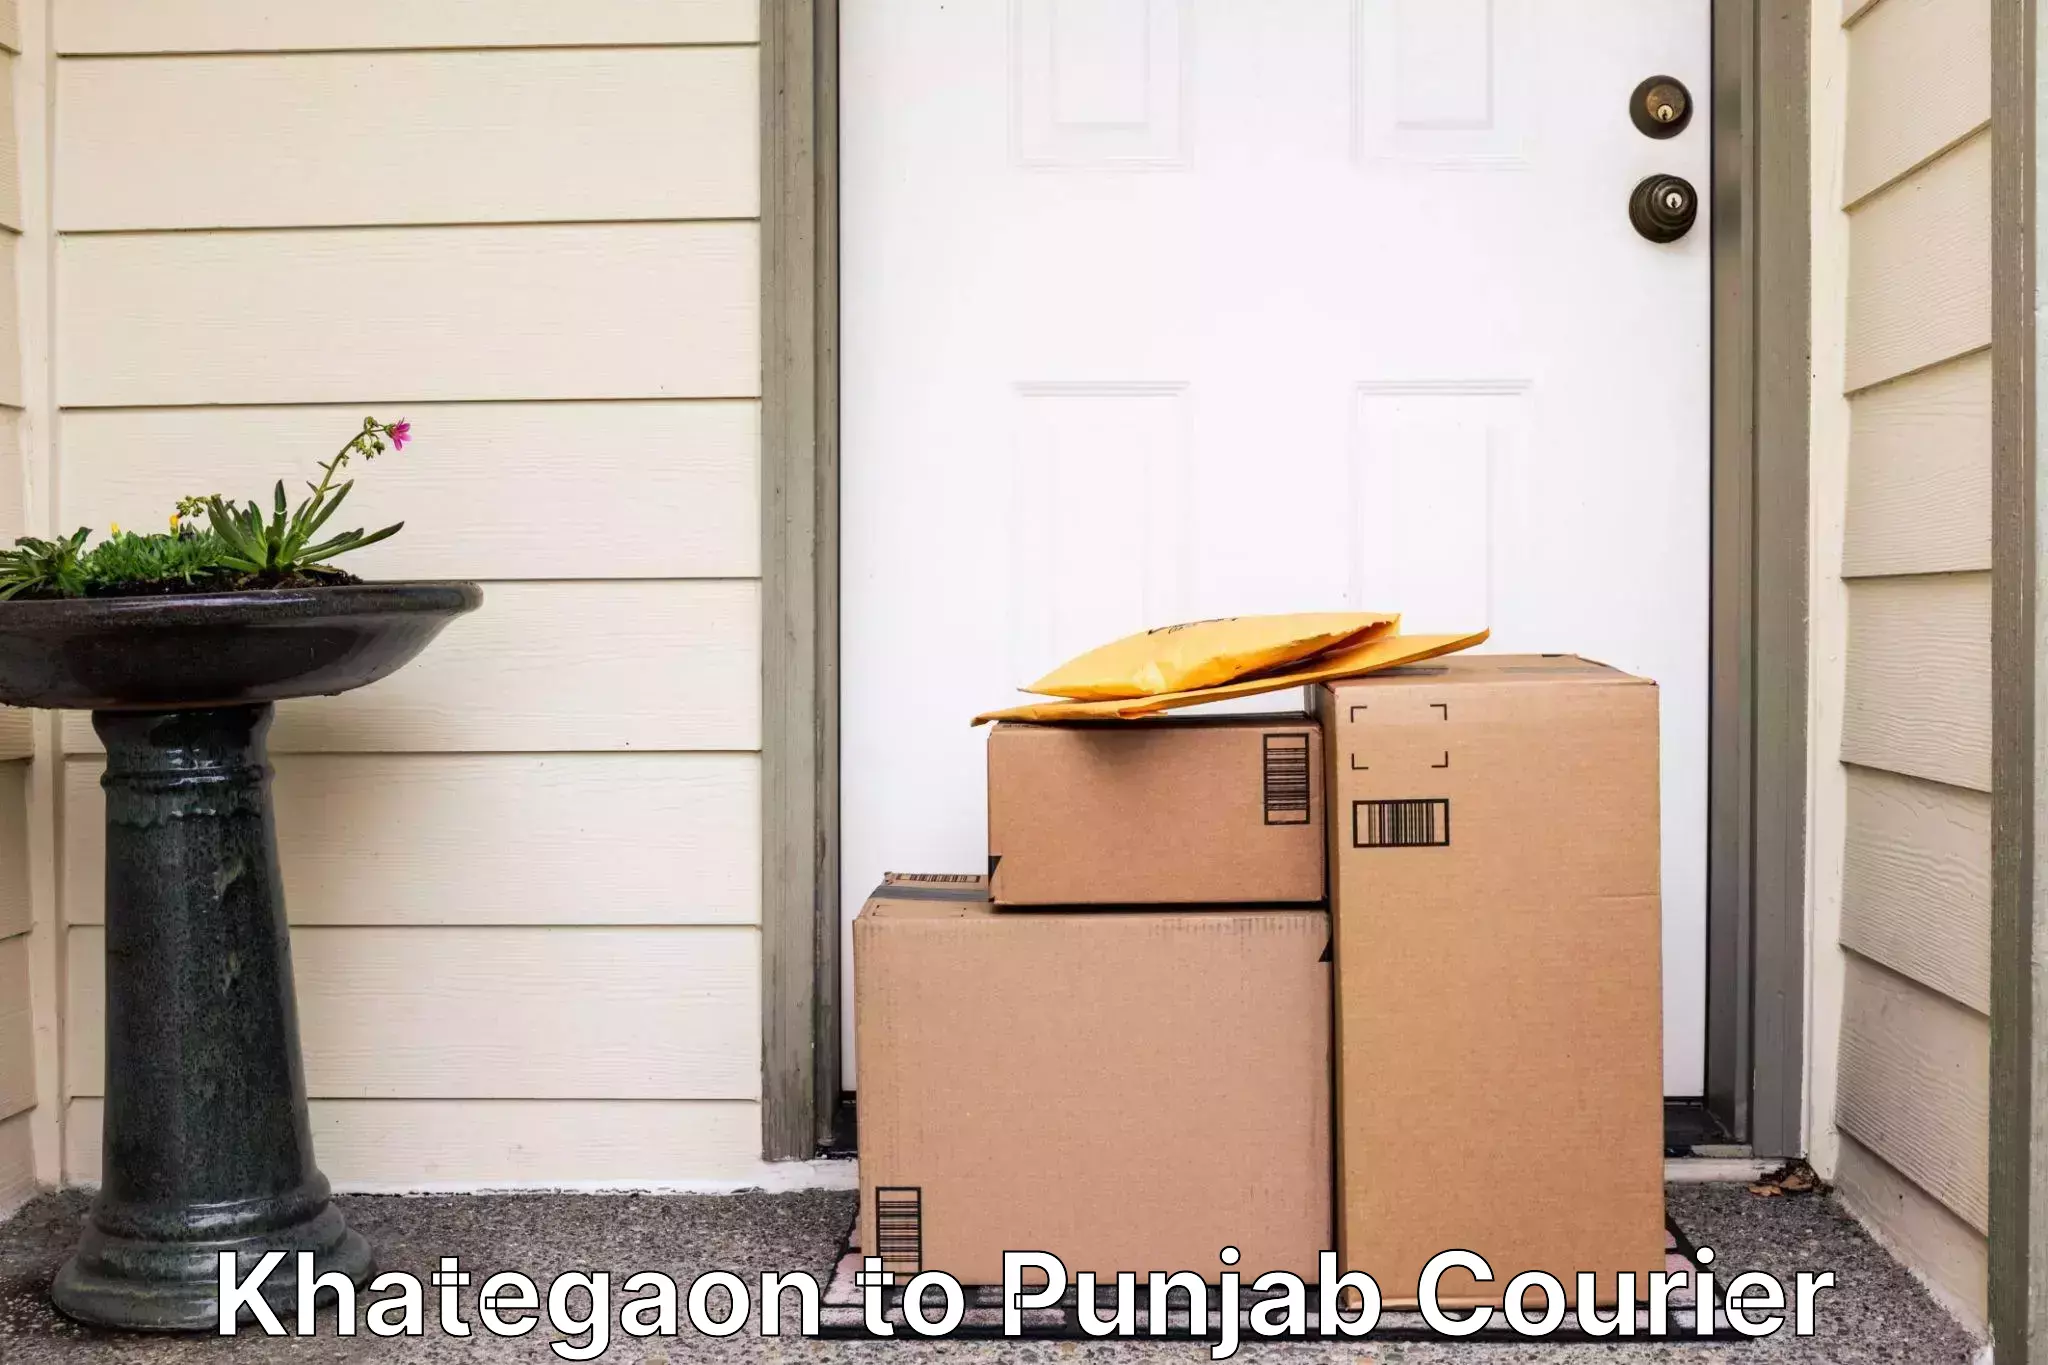 Courier service comparison in Khategaon to Punjab